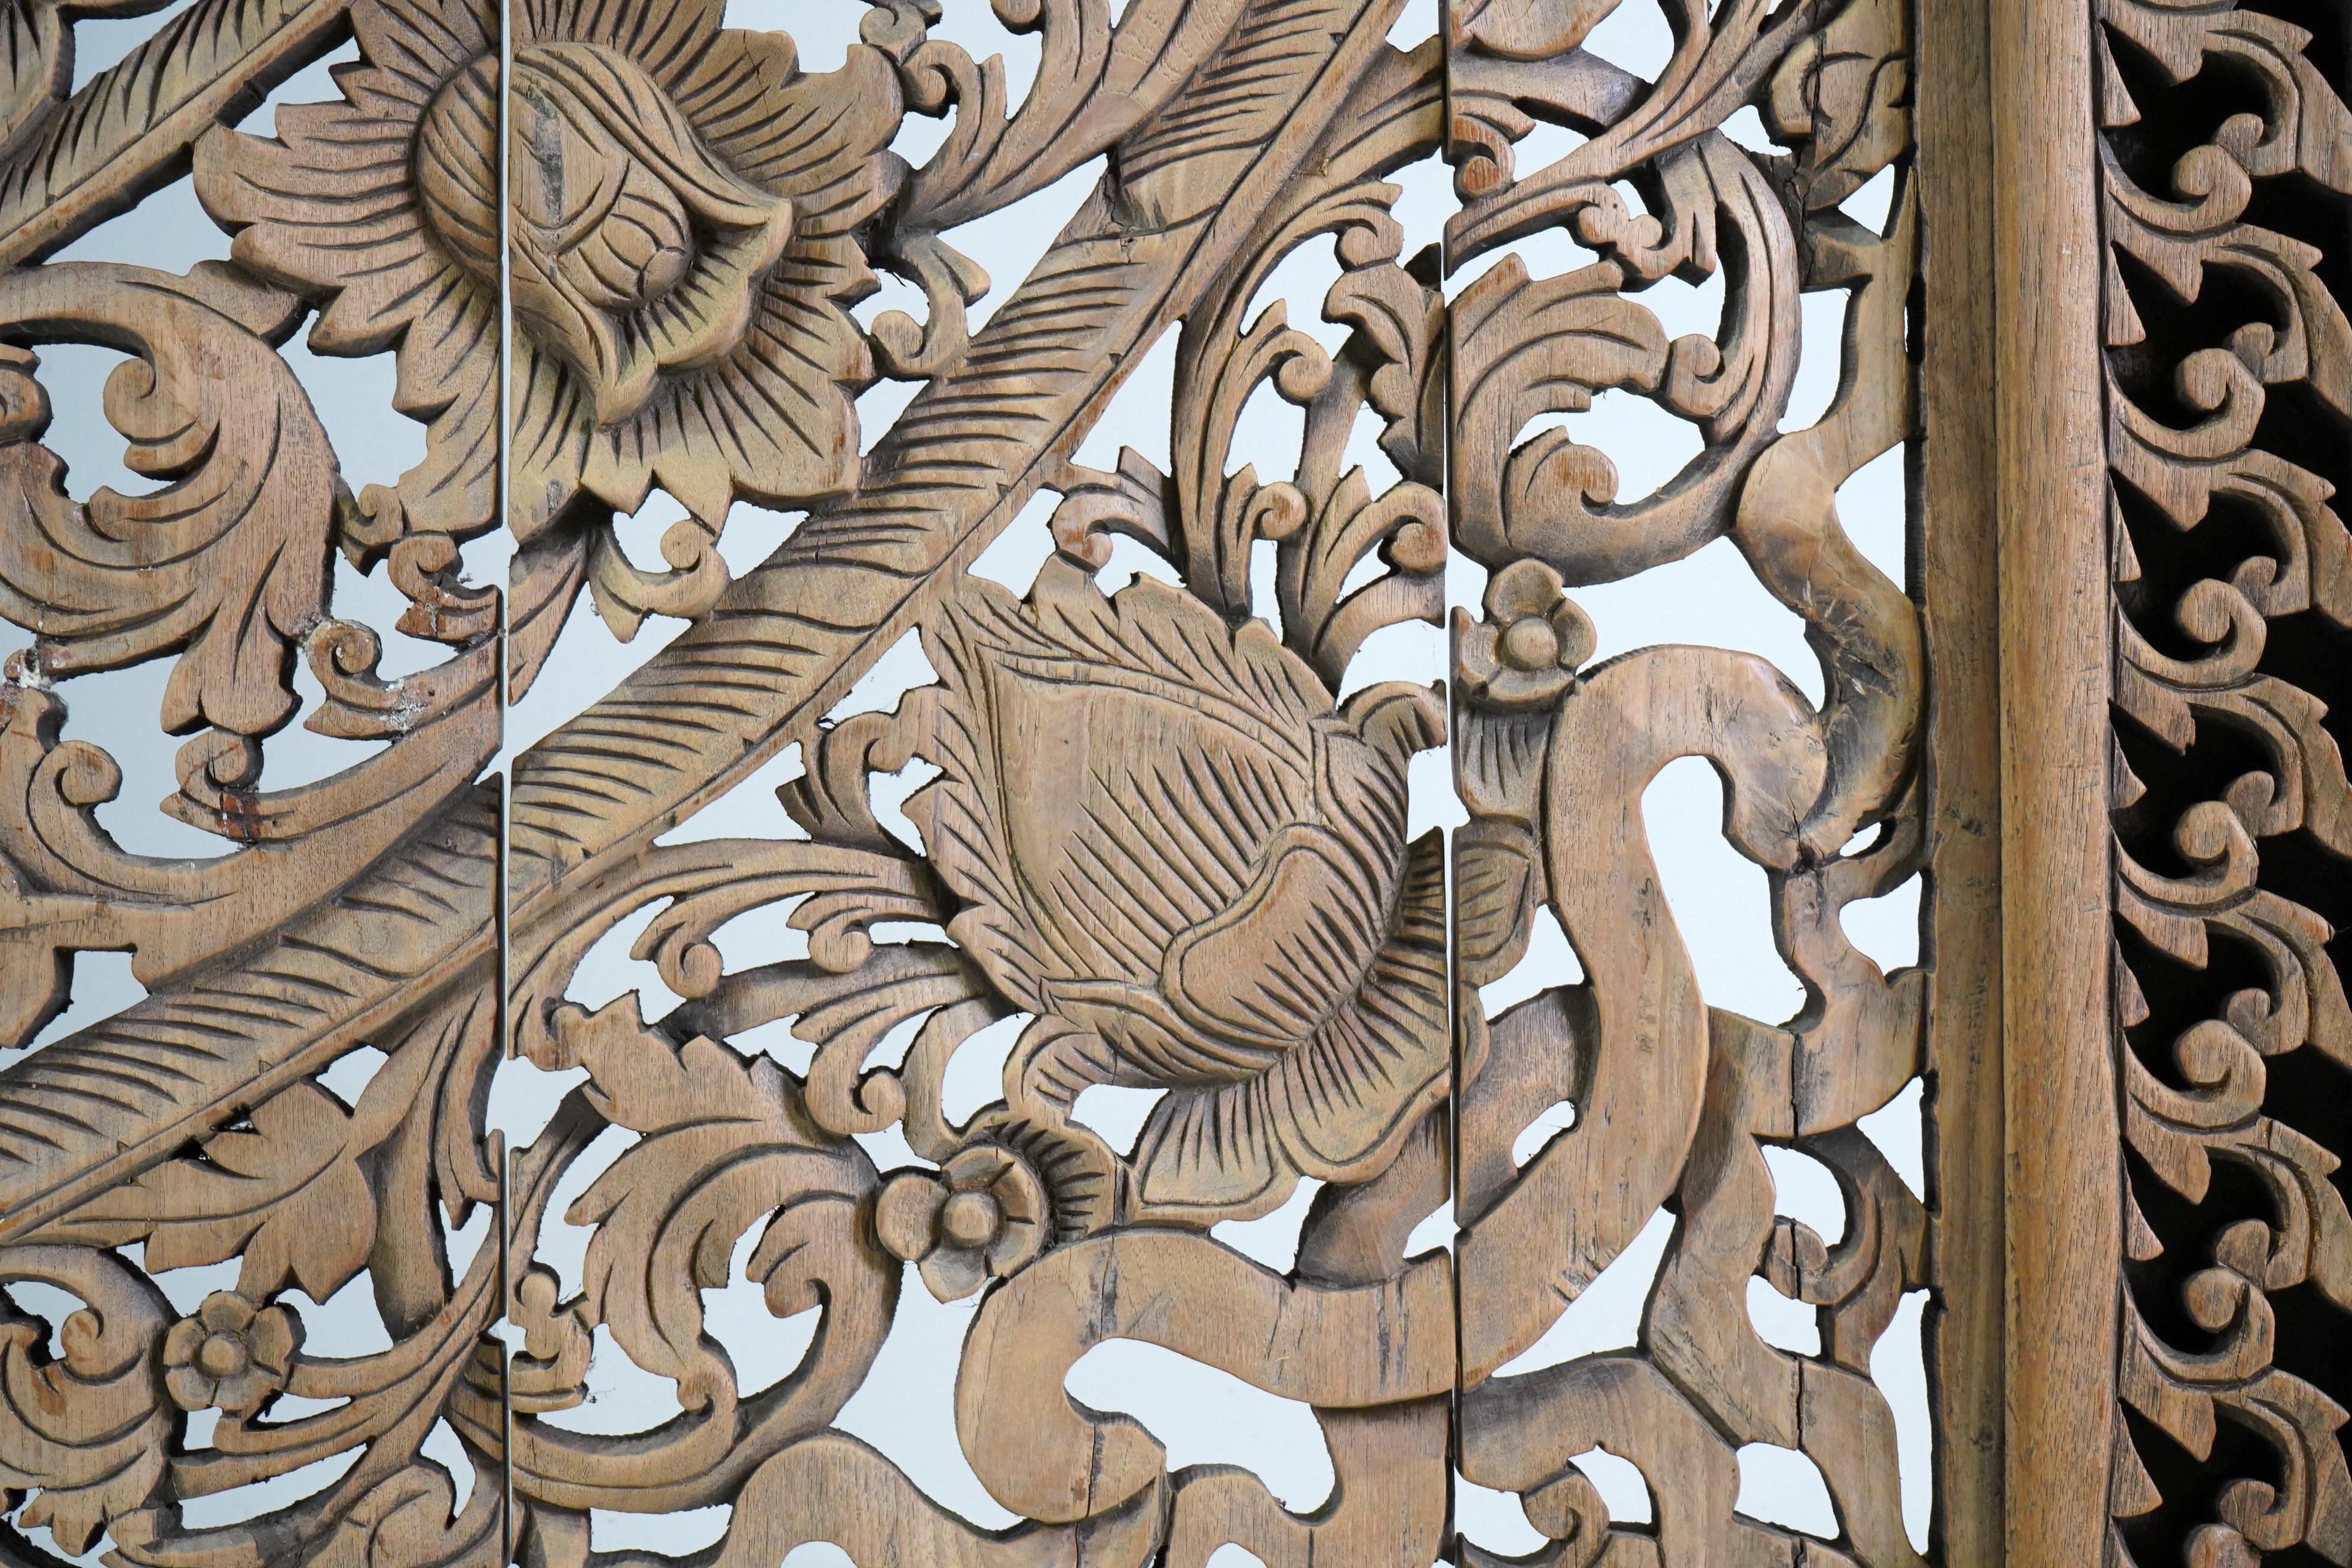 A Carved Teak Wood Lotus Flower Panel 8' x 8' 2